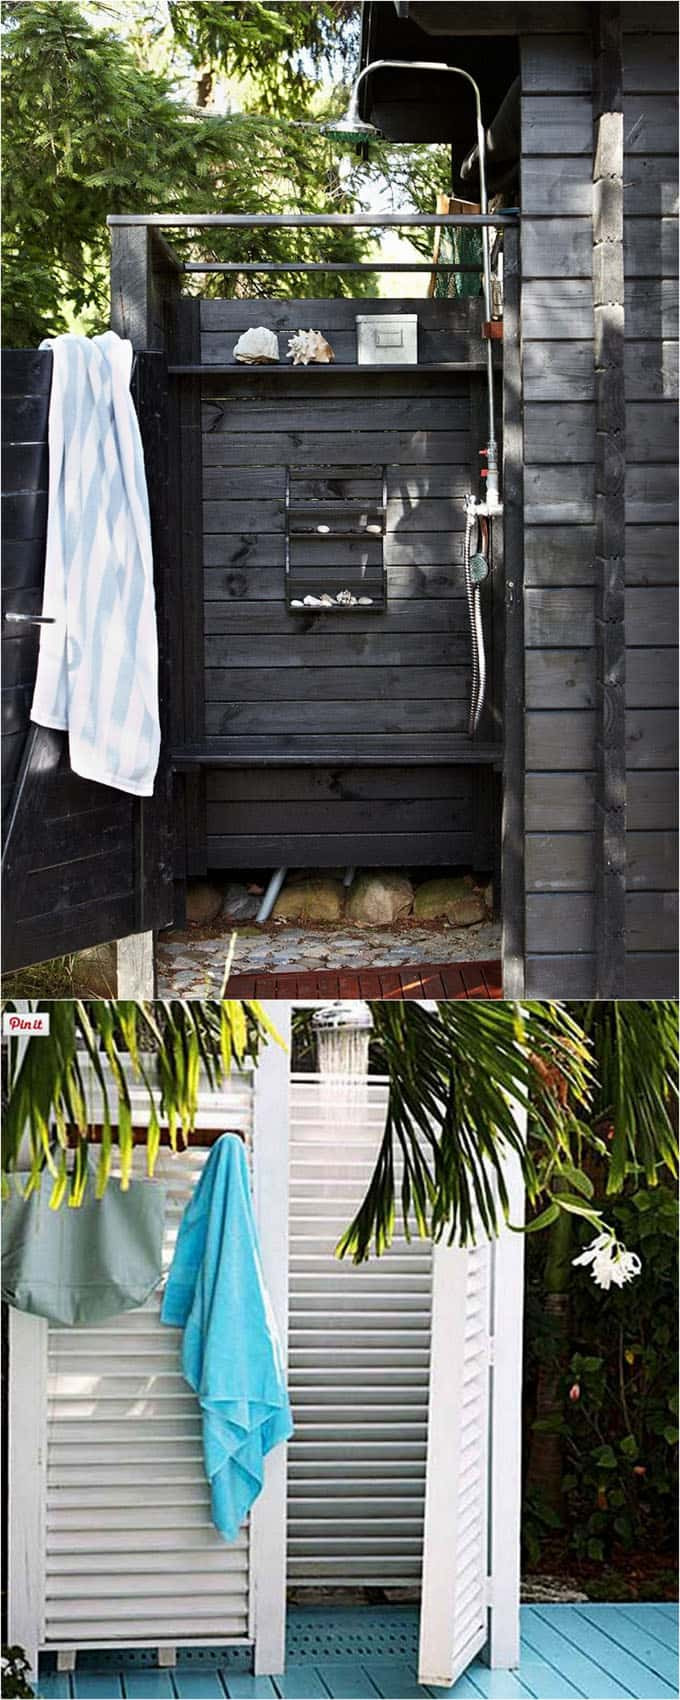 DIY Outdoor Shower Ideas
 32 Beautiful DIY Outdoor Shower Ideas for the Best